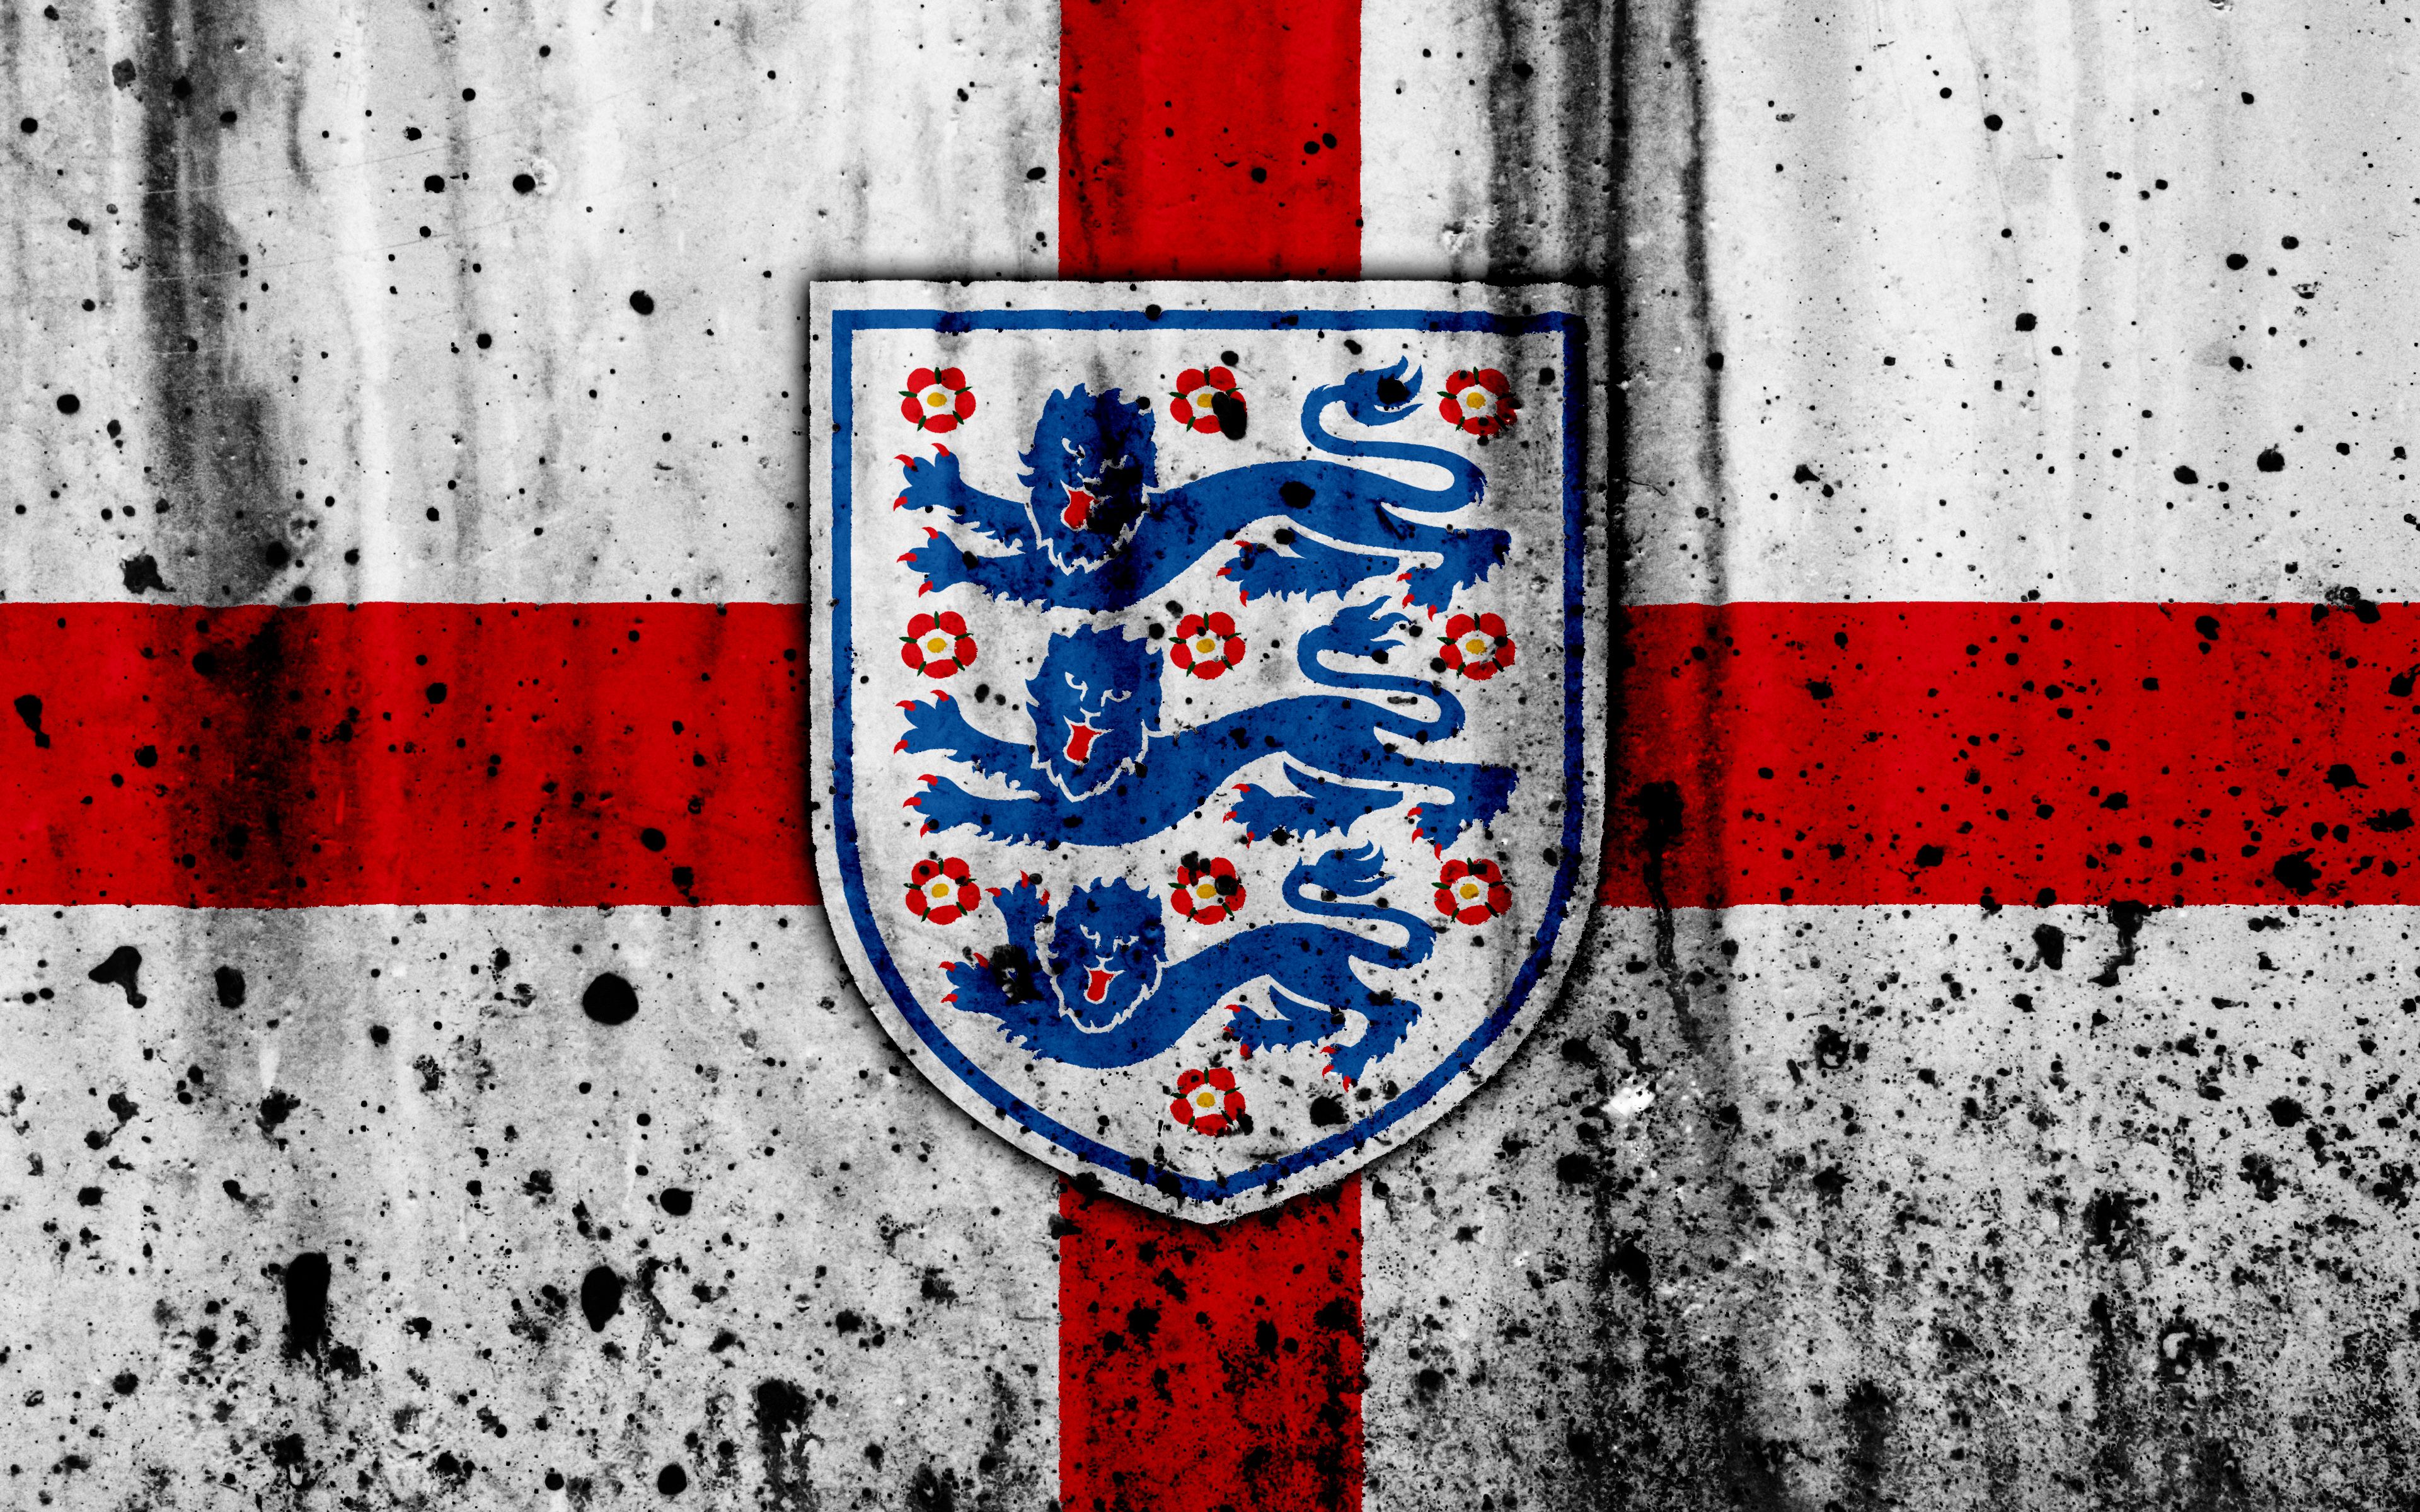 England Football Squad Wallpaper Hd 2021 Football Wallpaper | Images ...